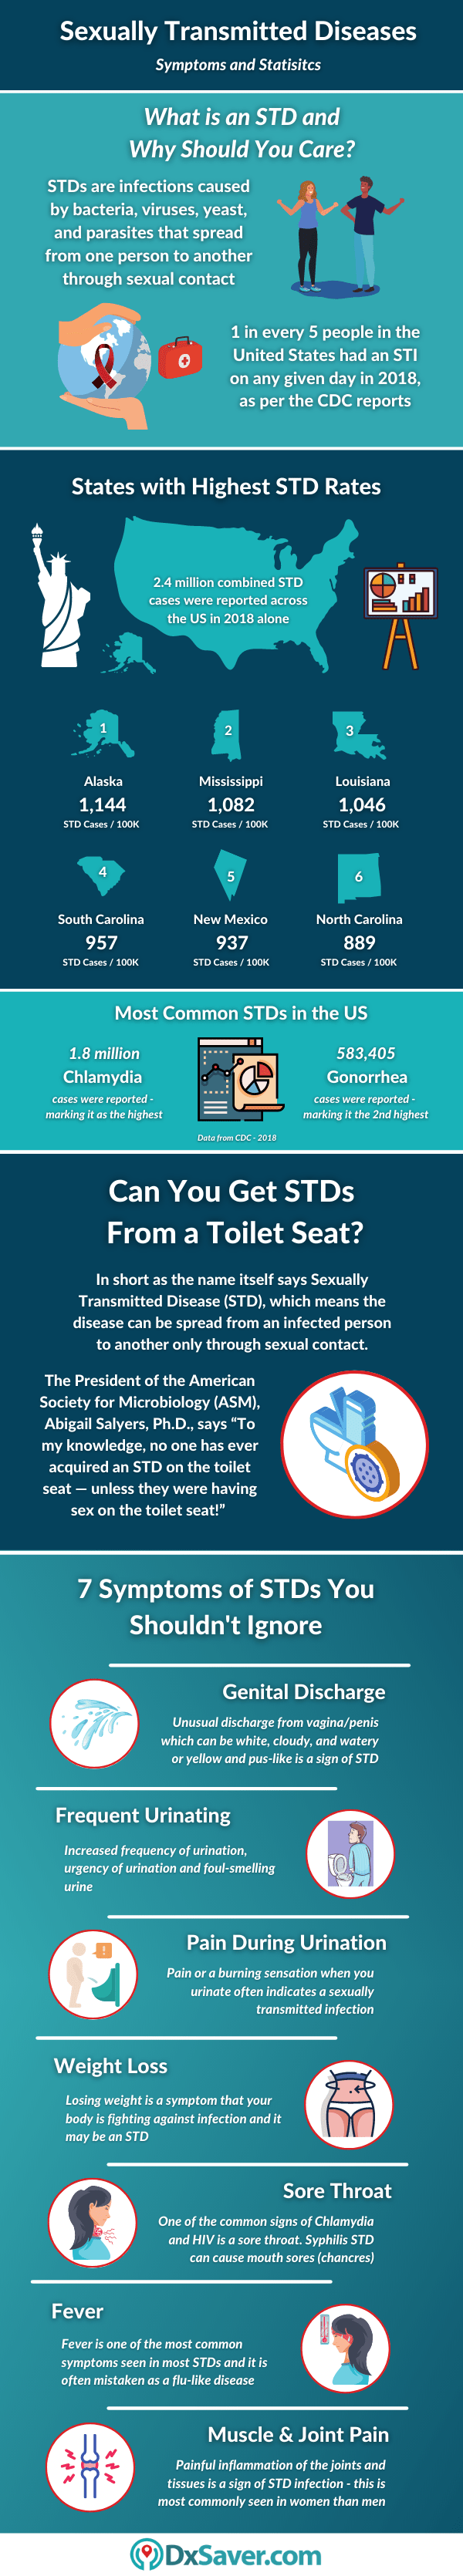 STD Symptoms and Chances of Getting an STD via Toilet Seat